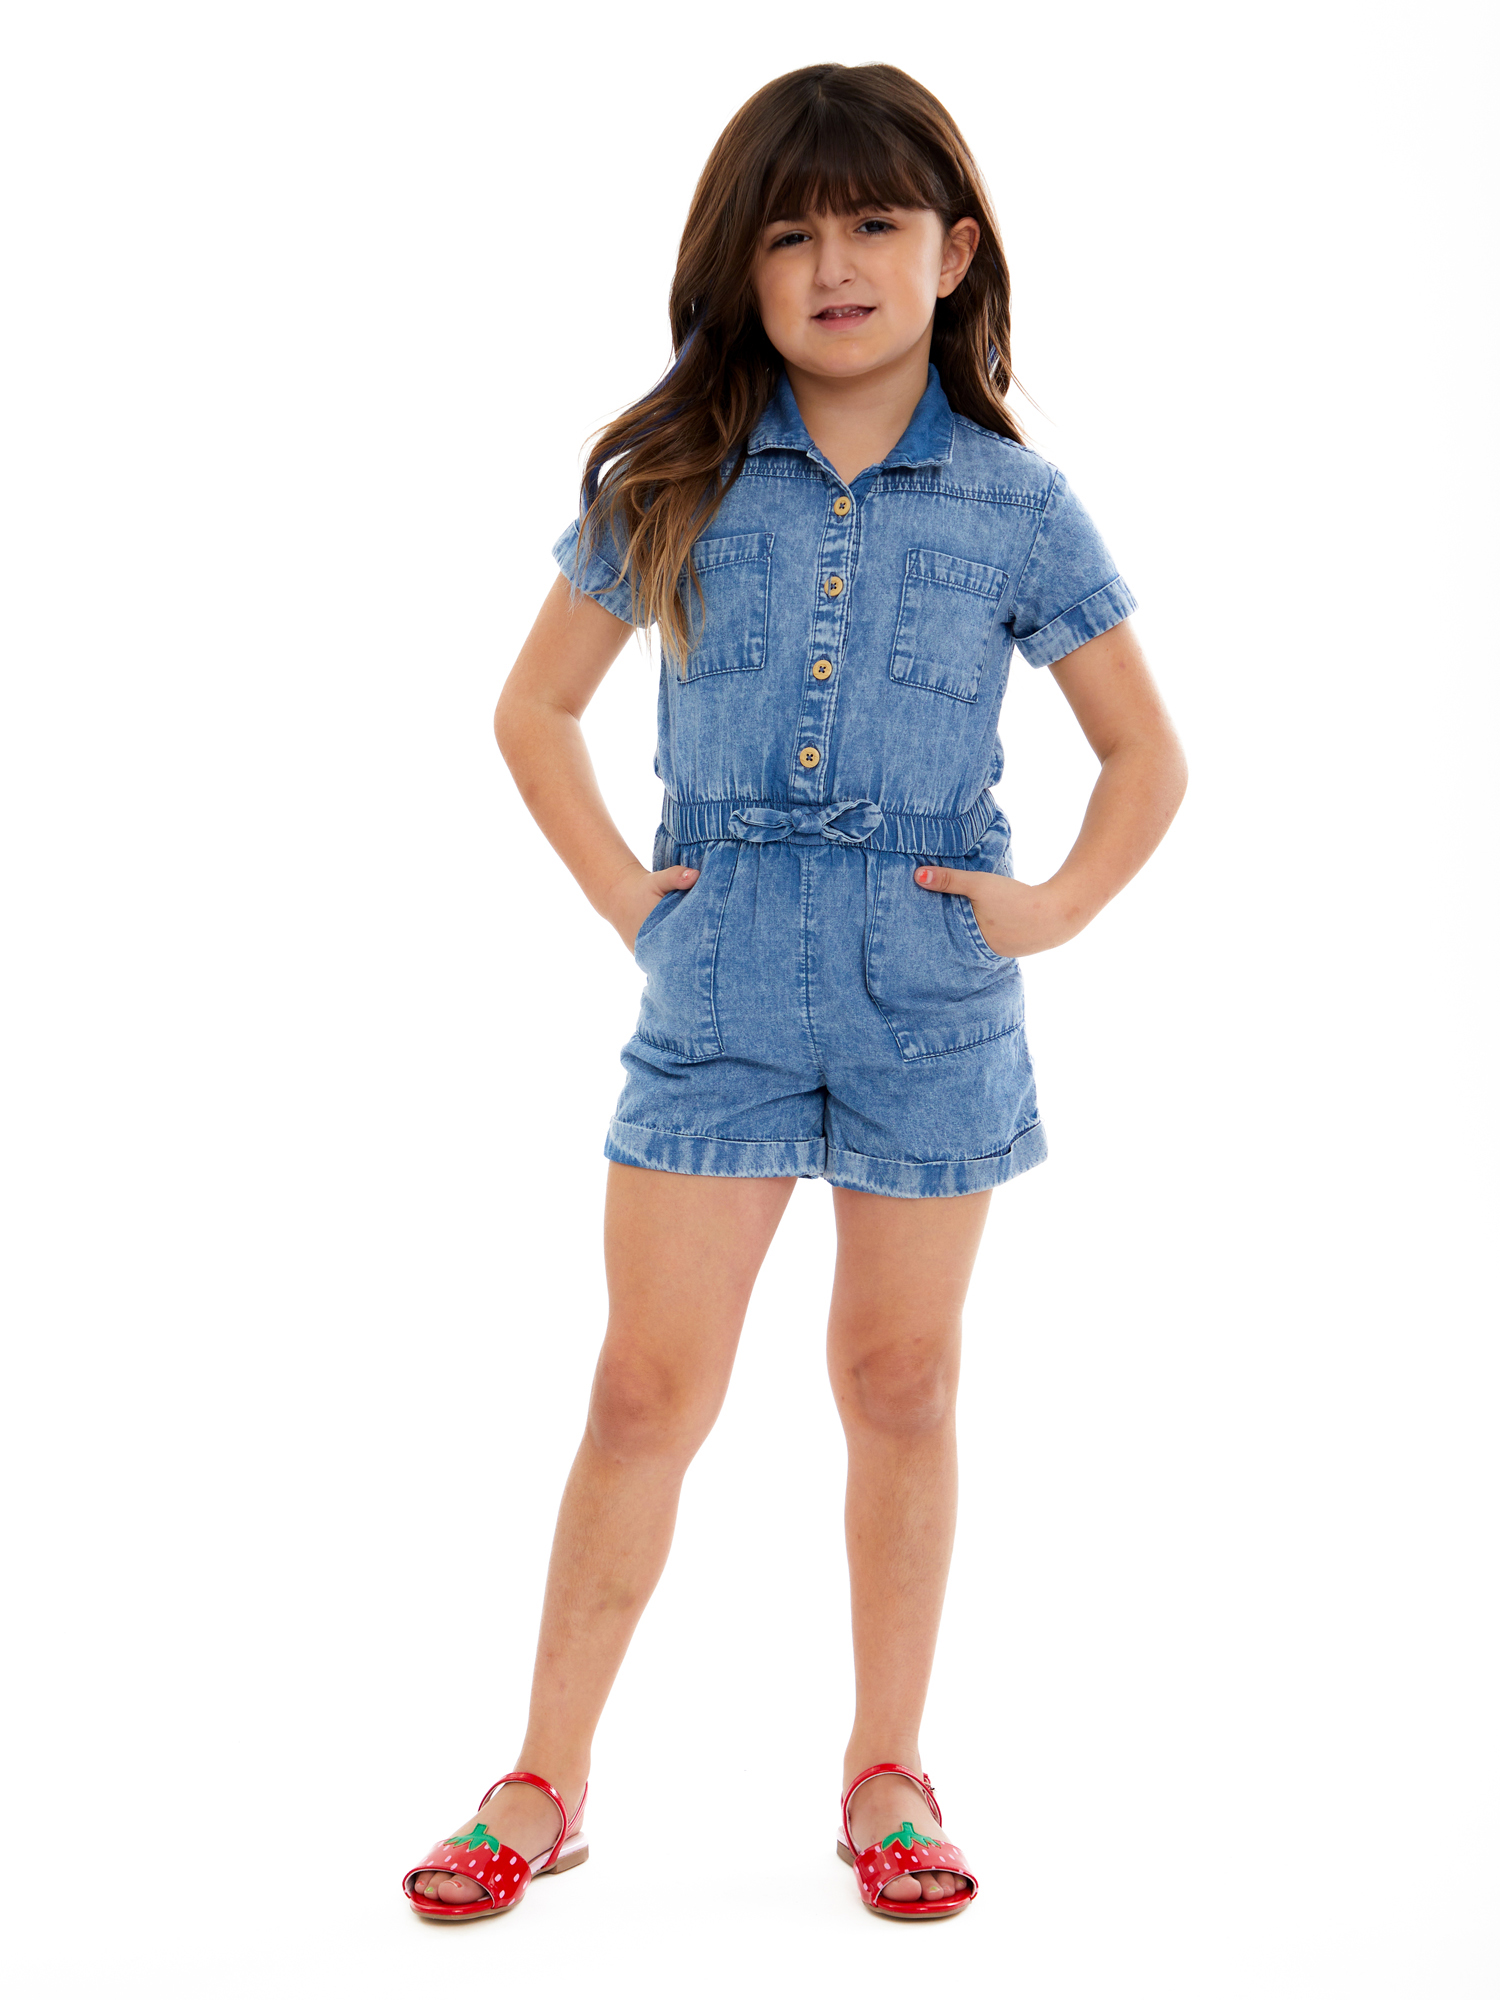 Wonder Nation Toddler Girl Short Sleeve Boilersuit Romper, Sizes 12M-5T - image 3 of 8